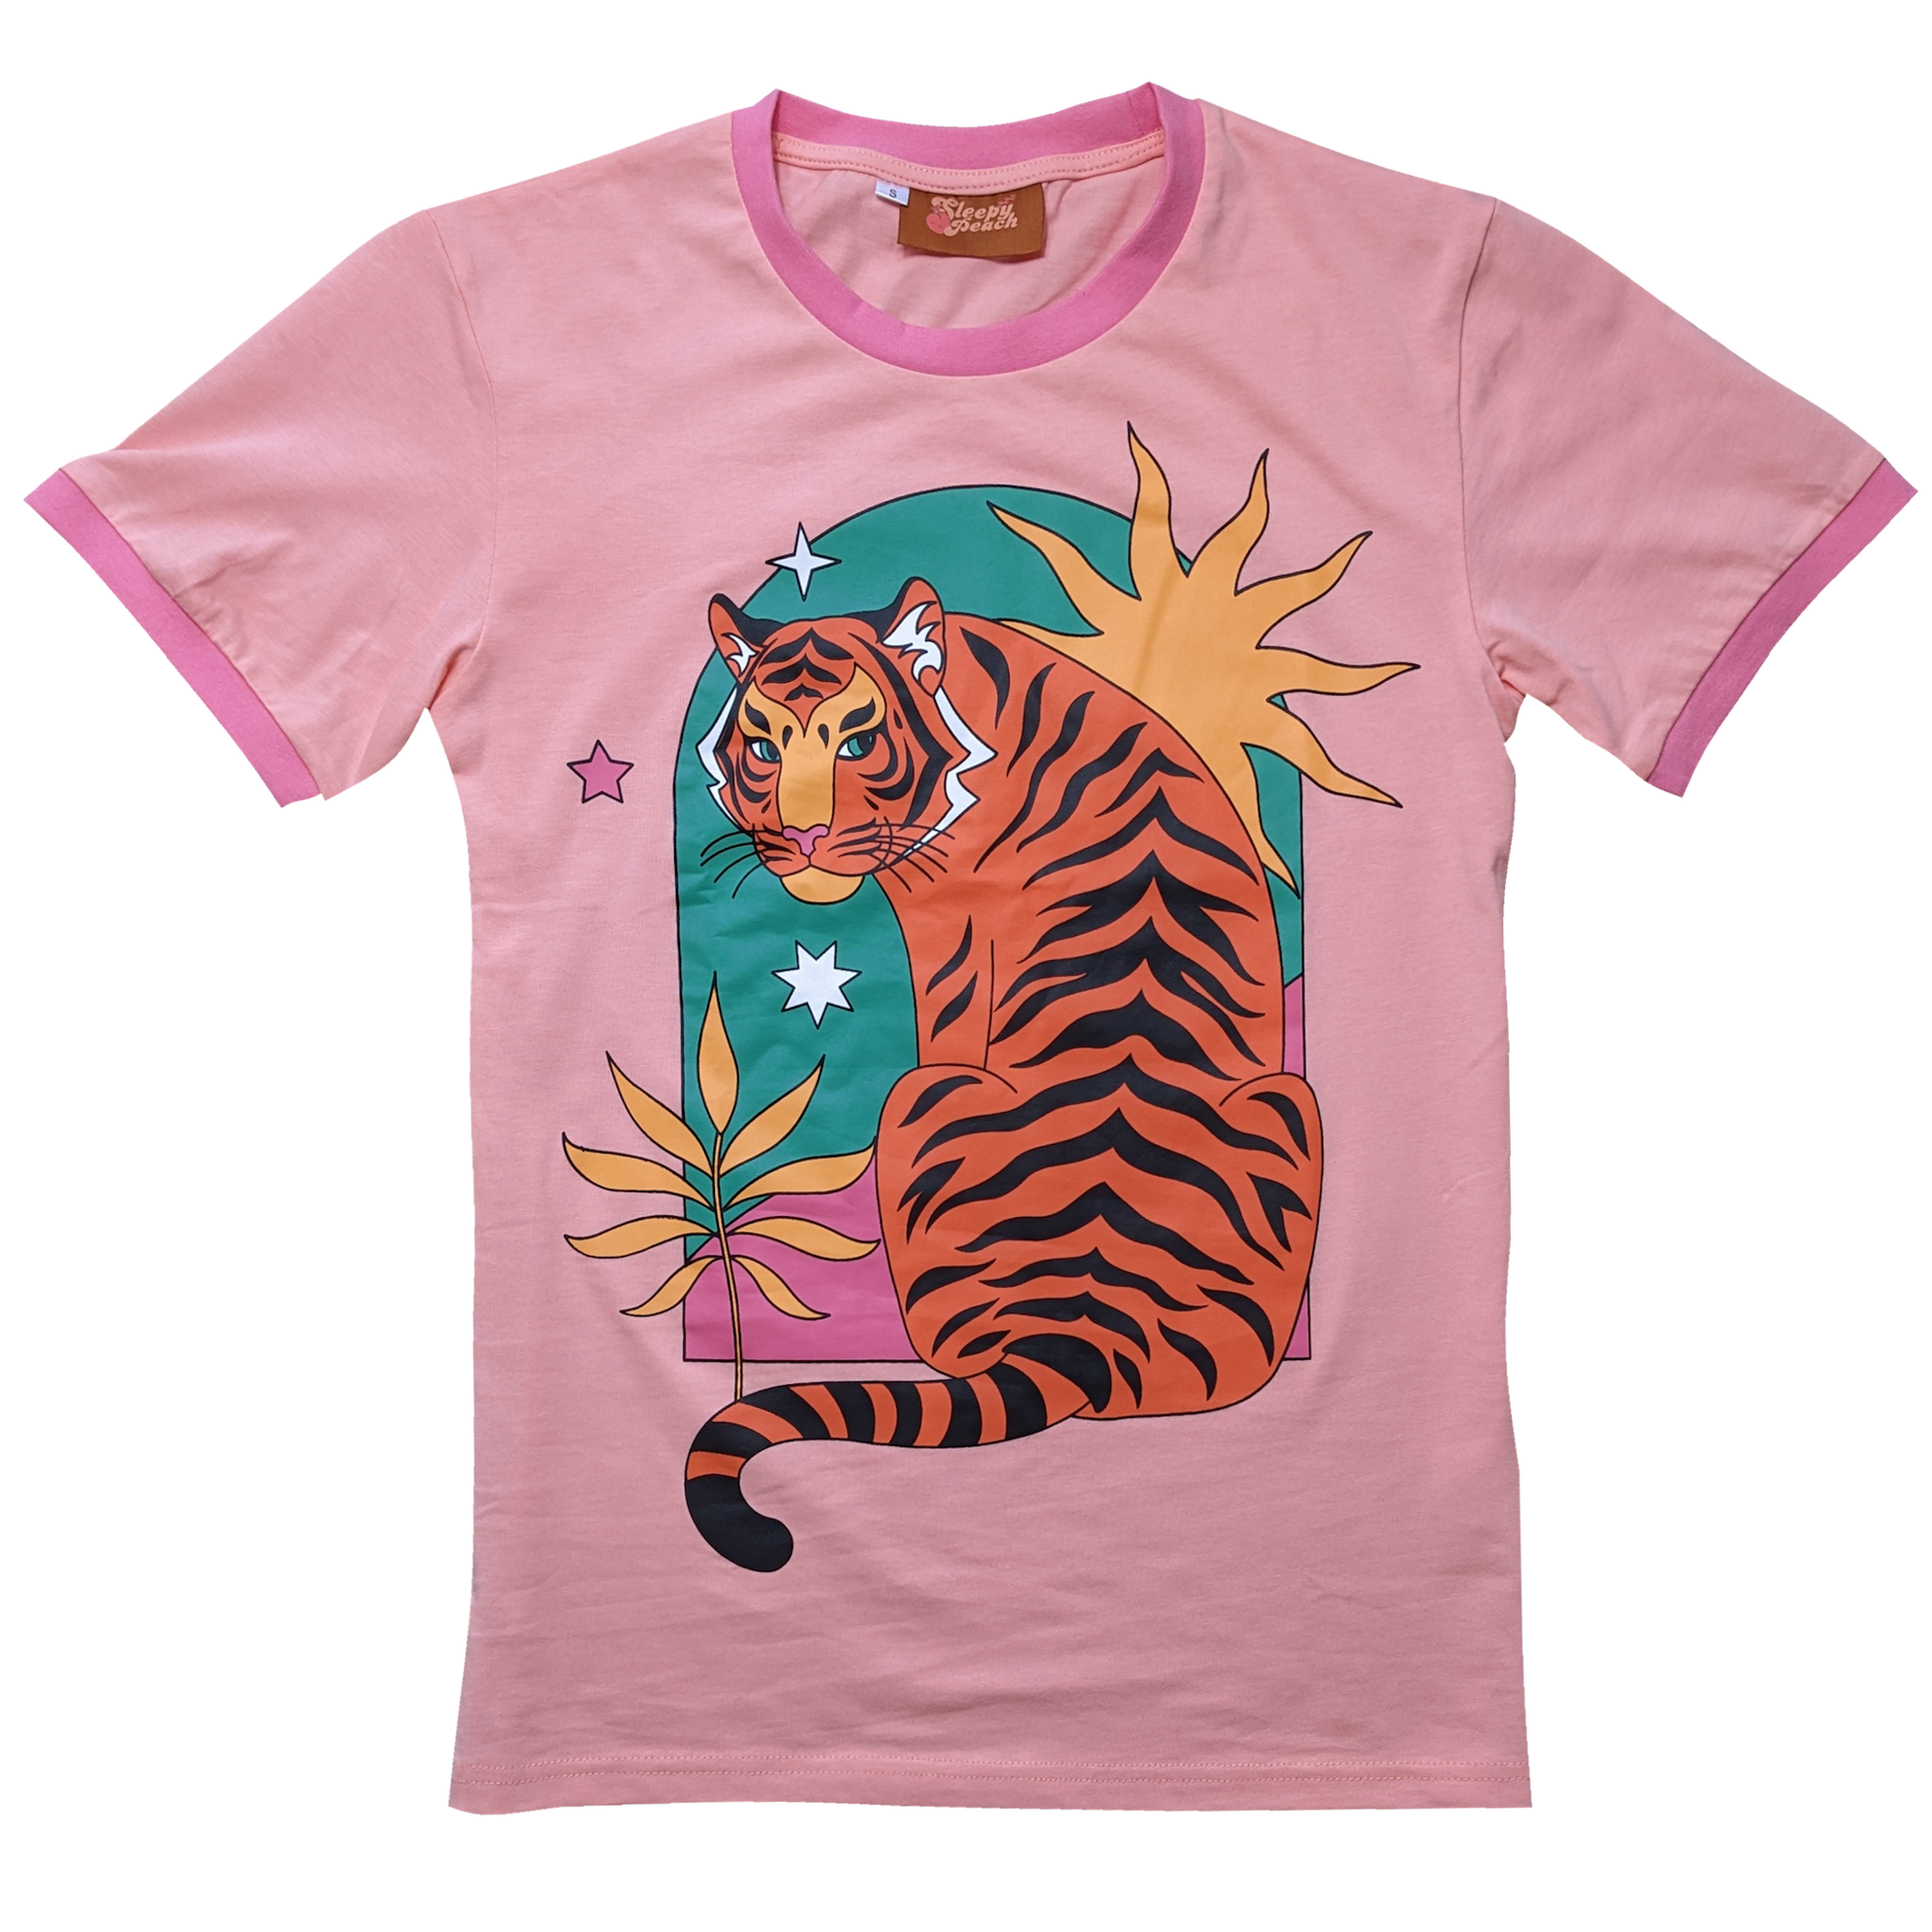 The Pensive Tiger Shirt - Sleepy Peach